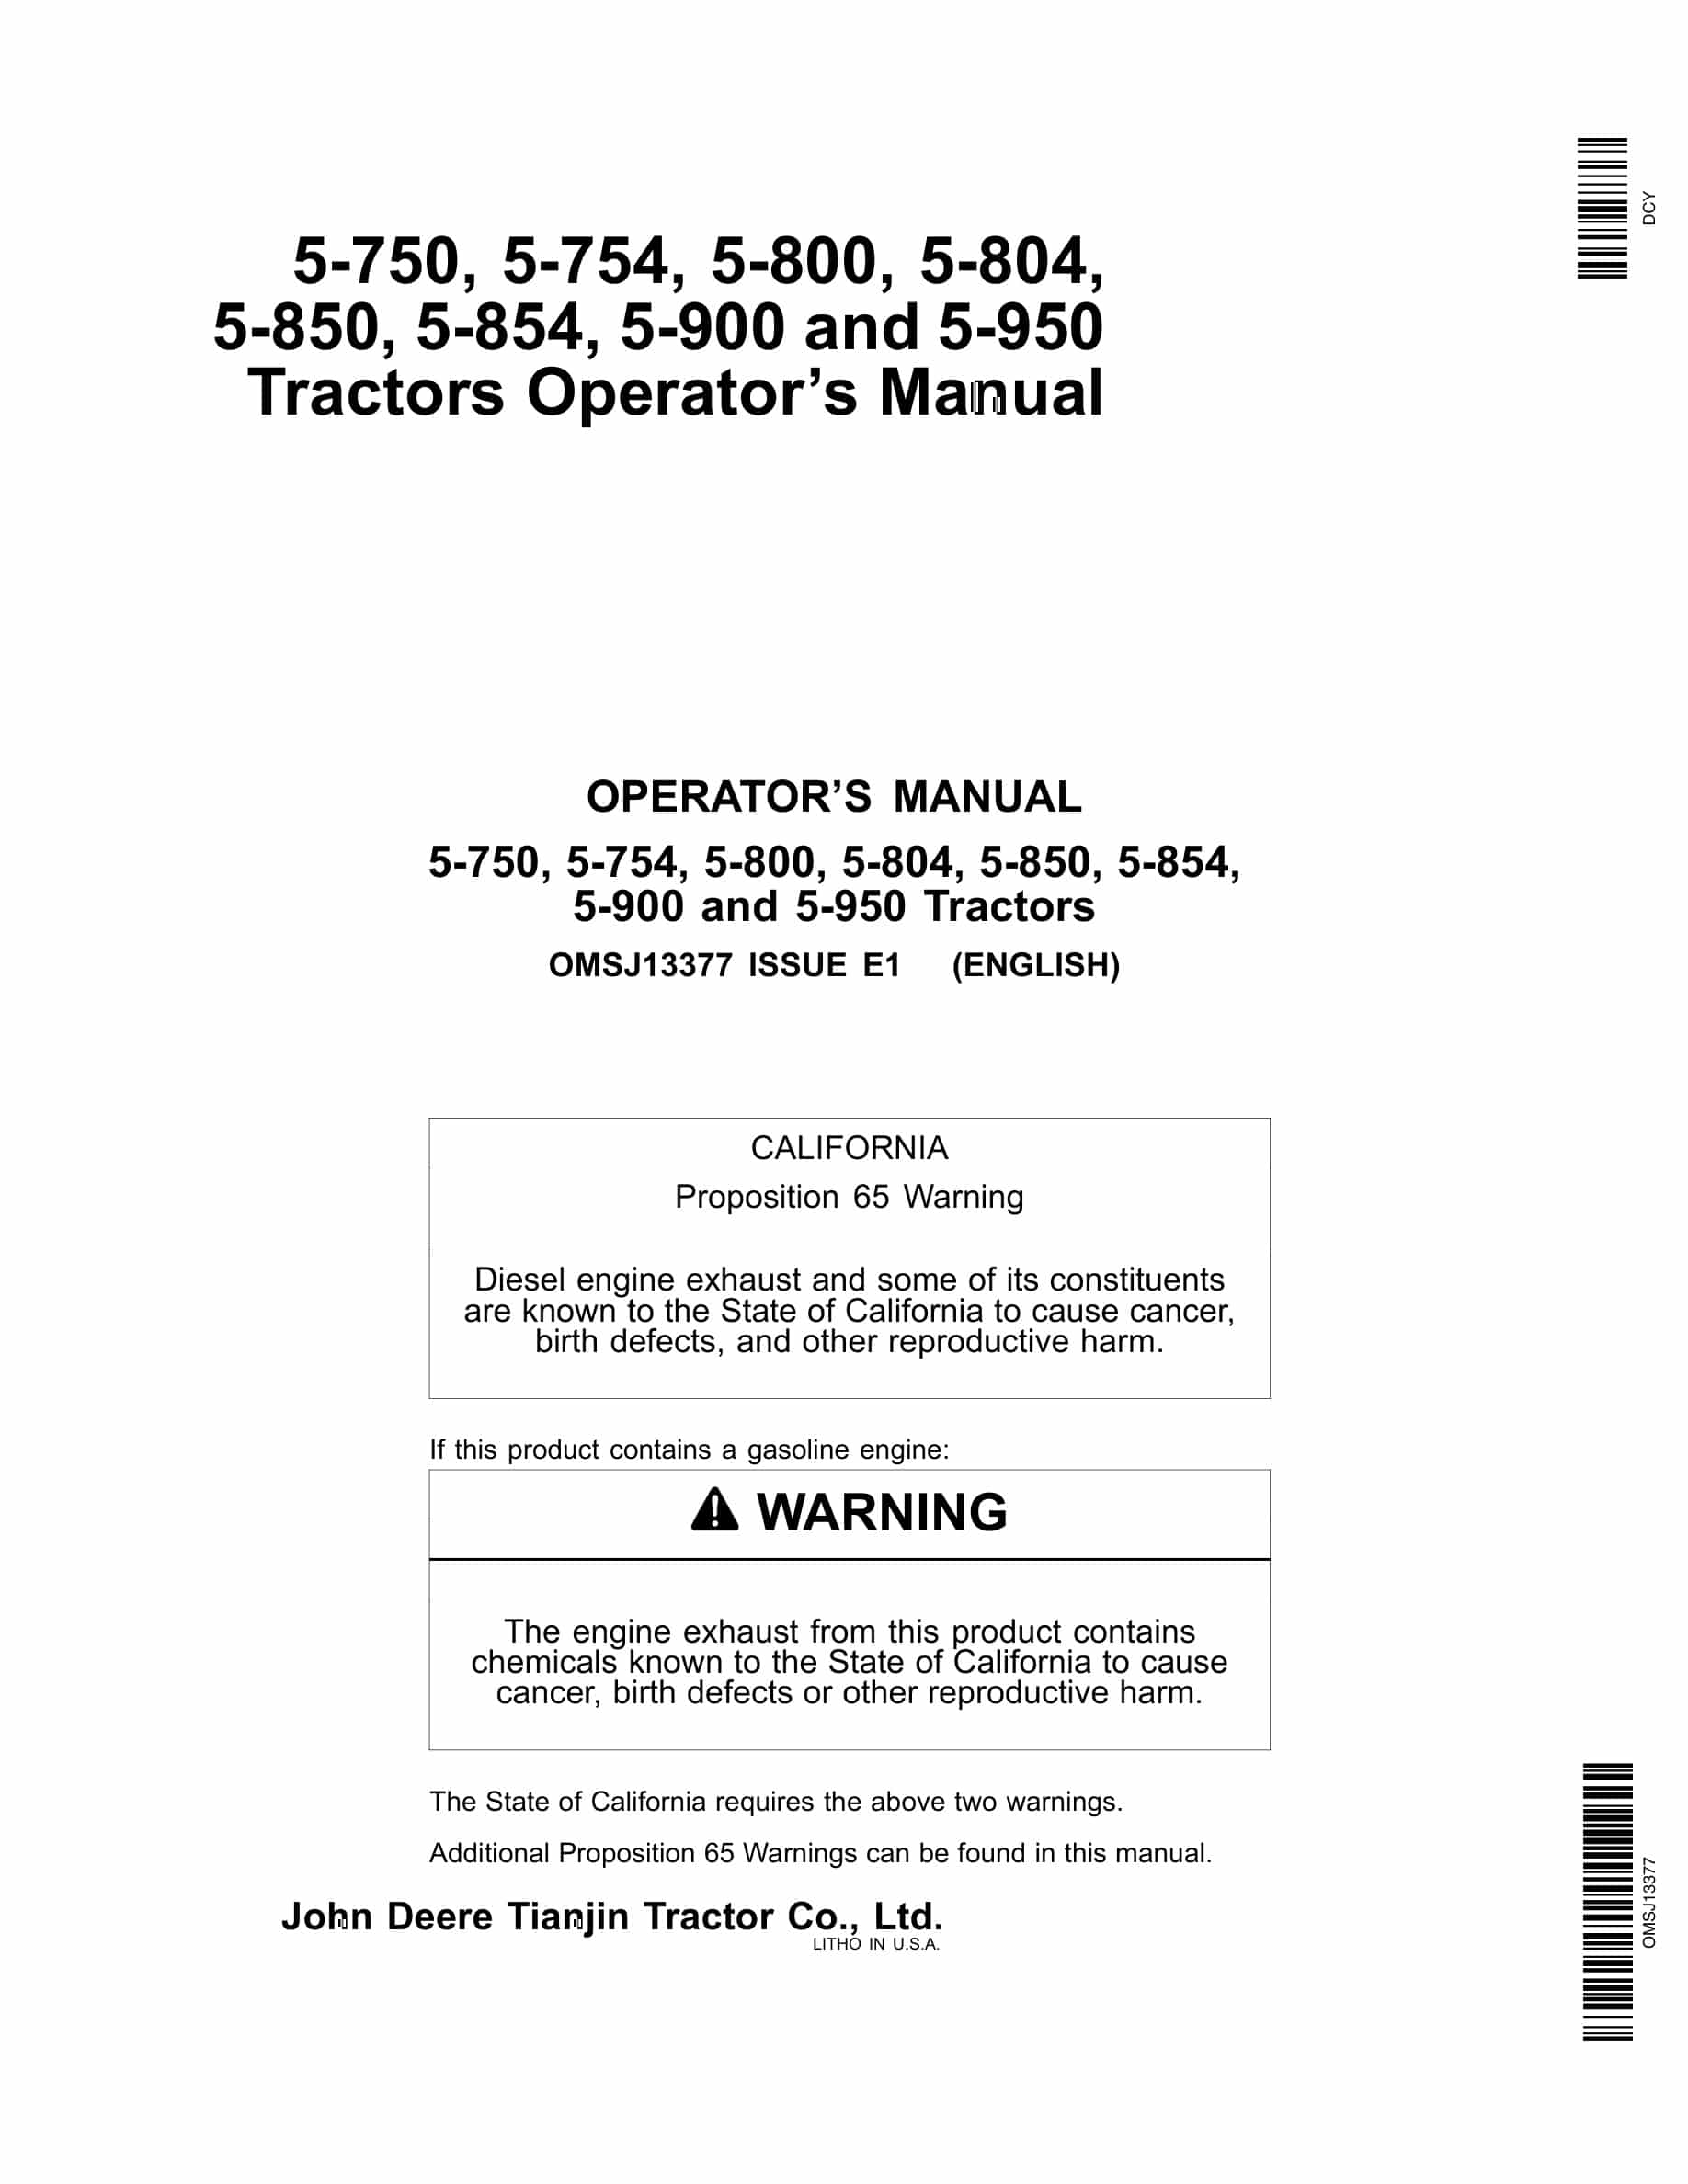 John Deere 5-750, 5-754, 5-800, 5-804, 5-850, 5-854, 5-900 And 5-950 Tractors Operator Manuals OMSJ13377-1